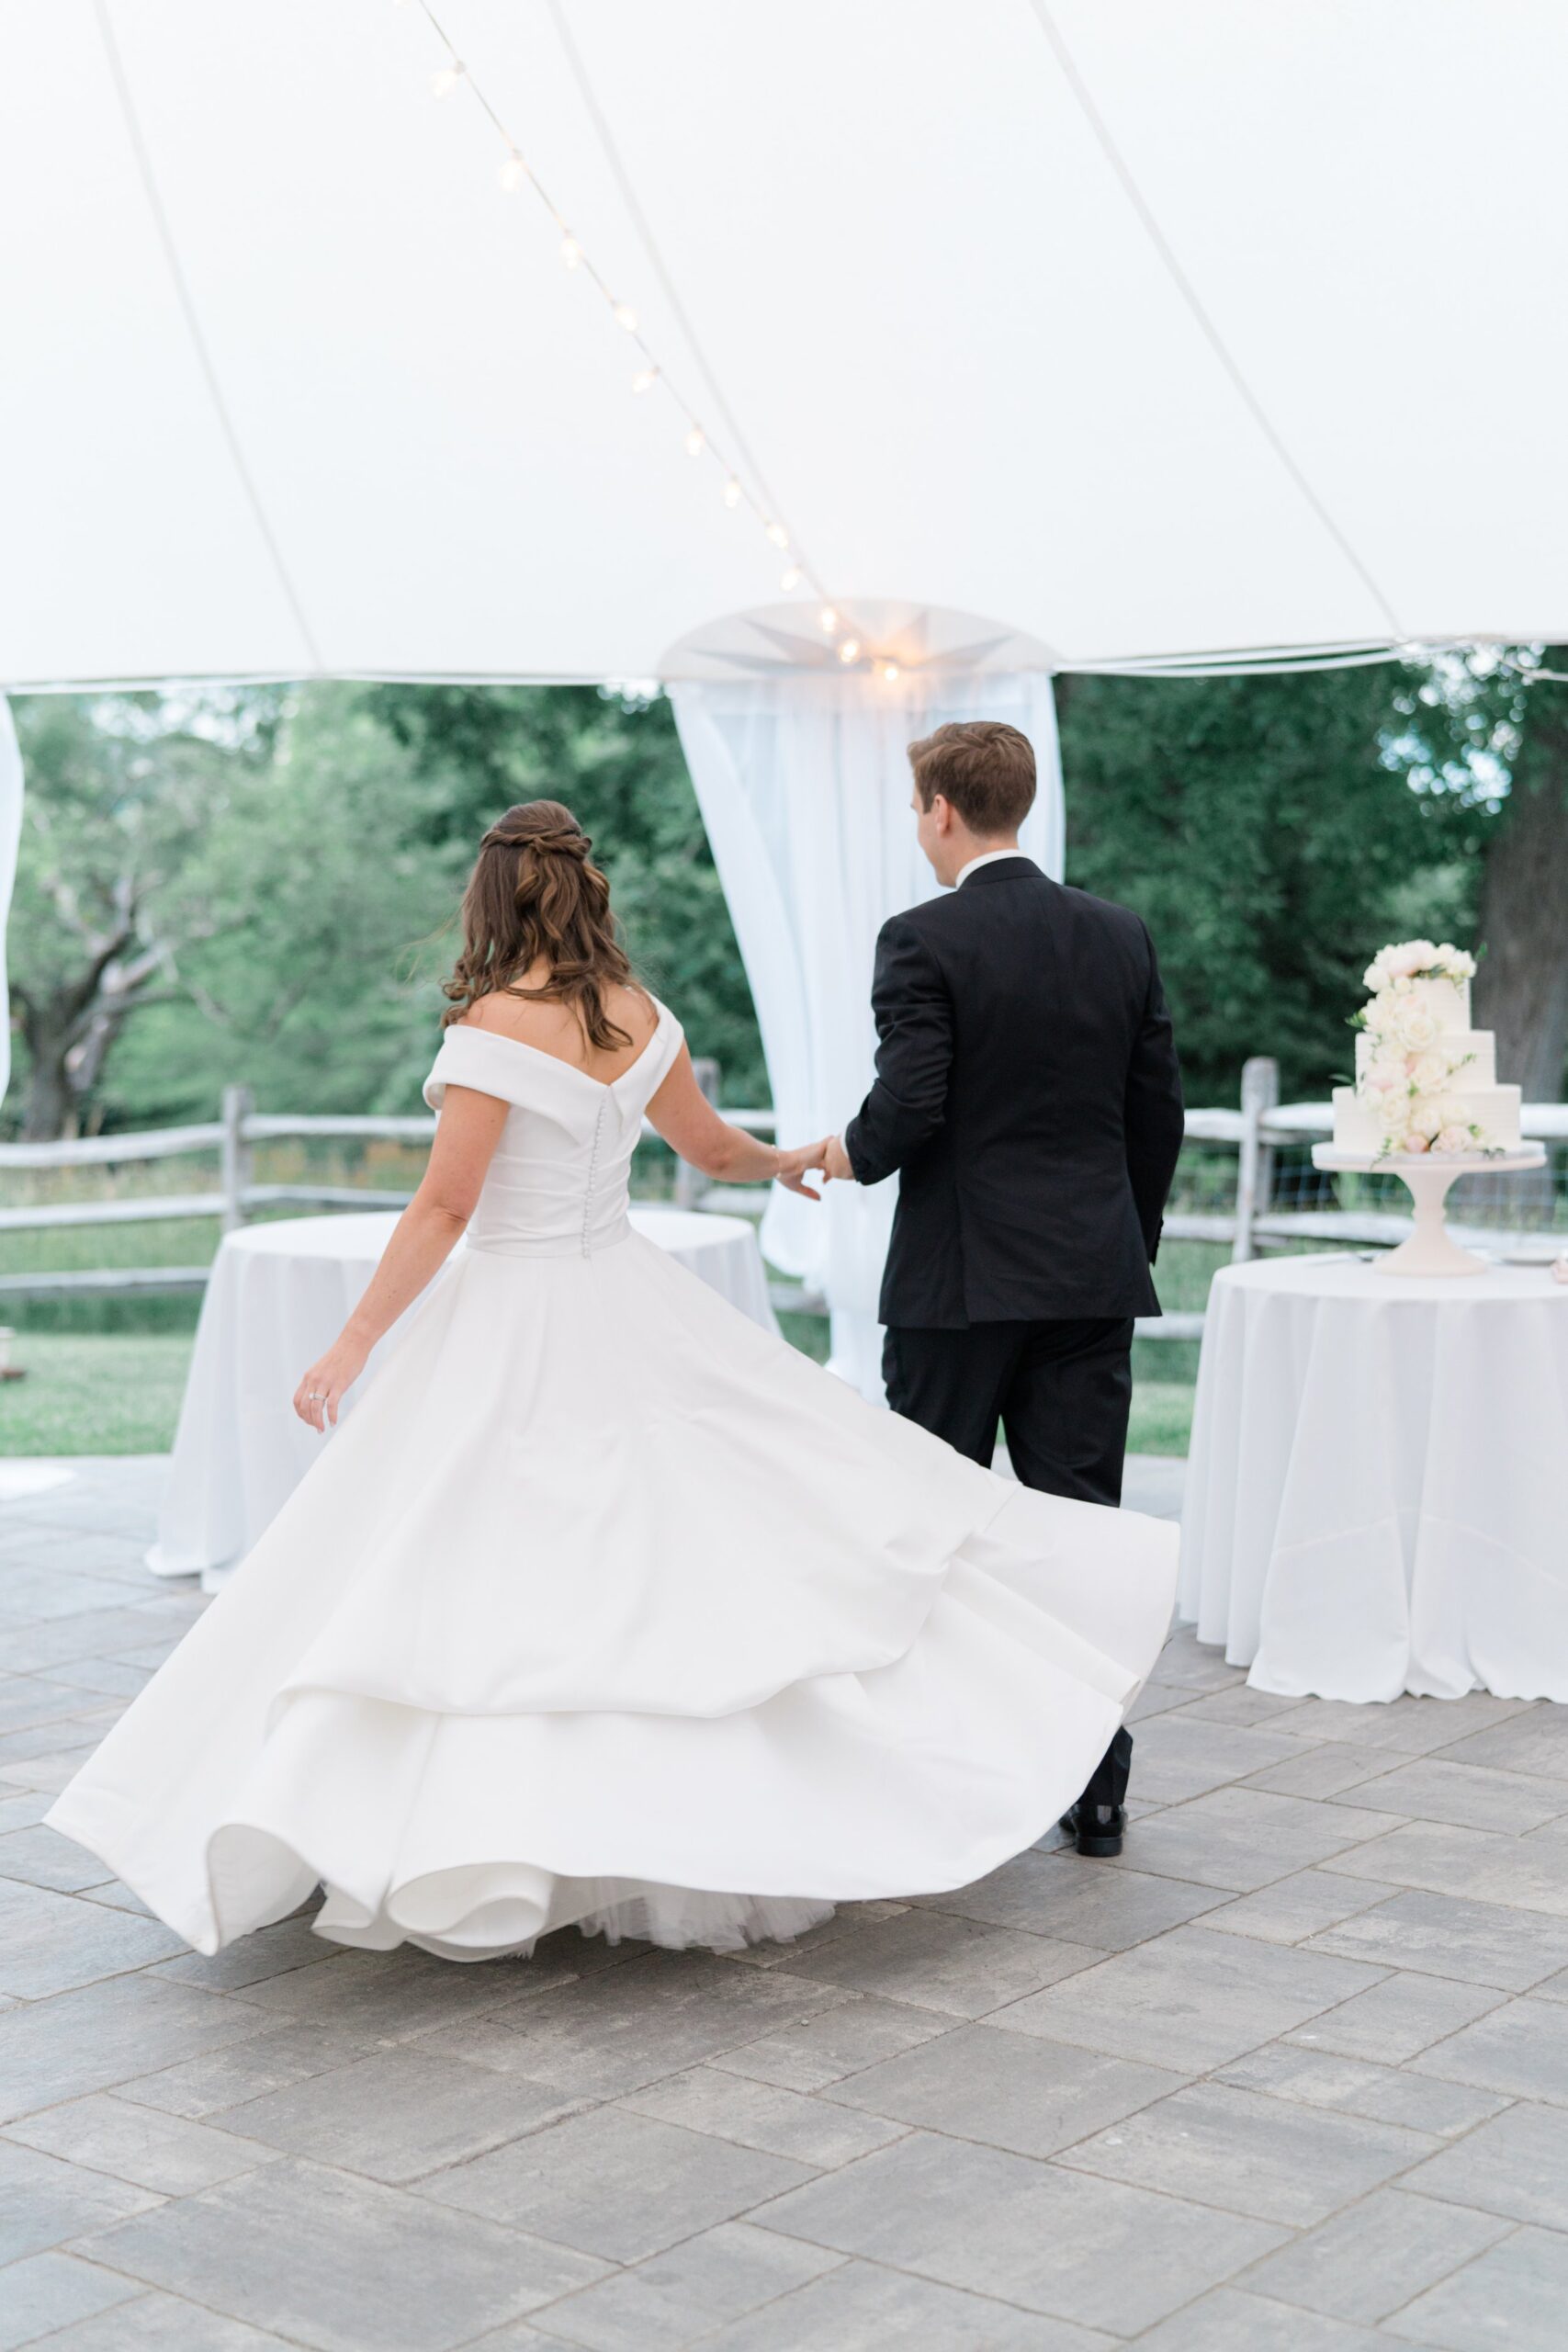 bride twirls her dress while walking at wedding reception.